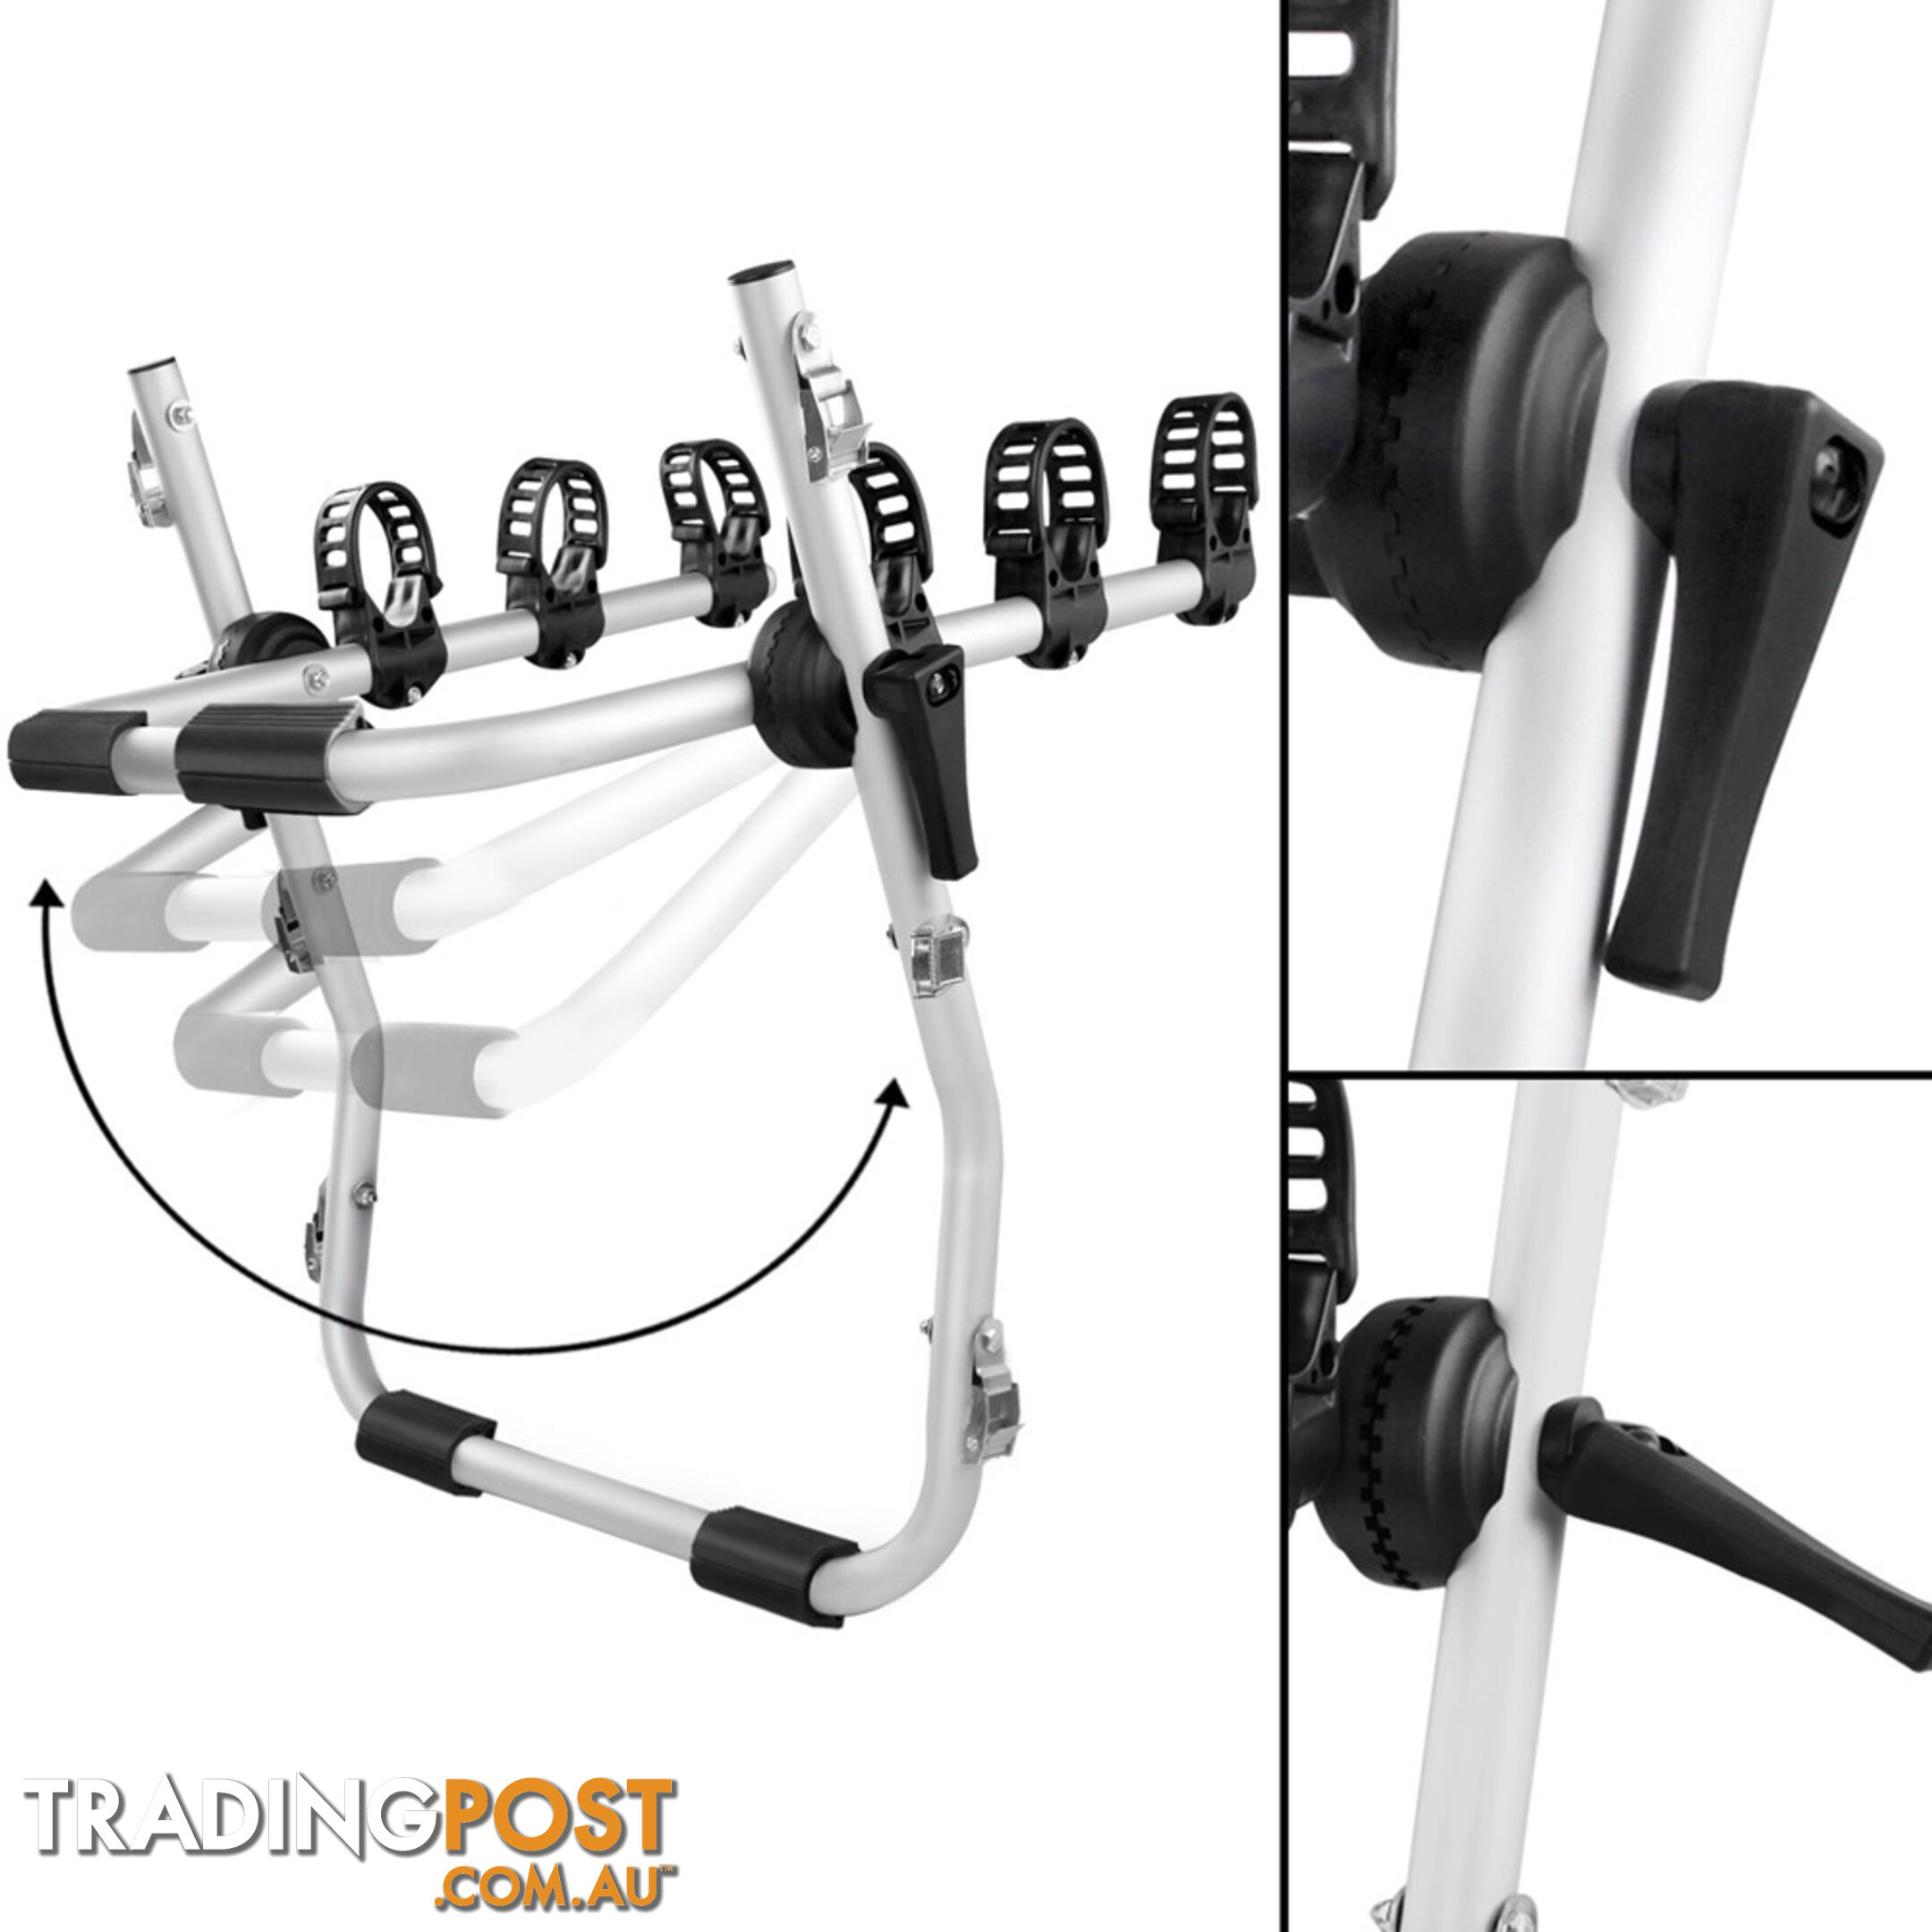 Foldable Aluminium Strap-On 3 Bicycle Bike Rack Carrier